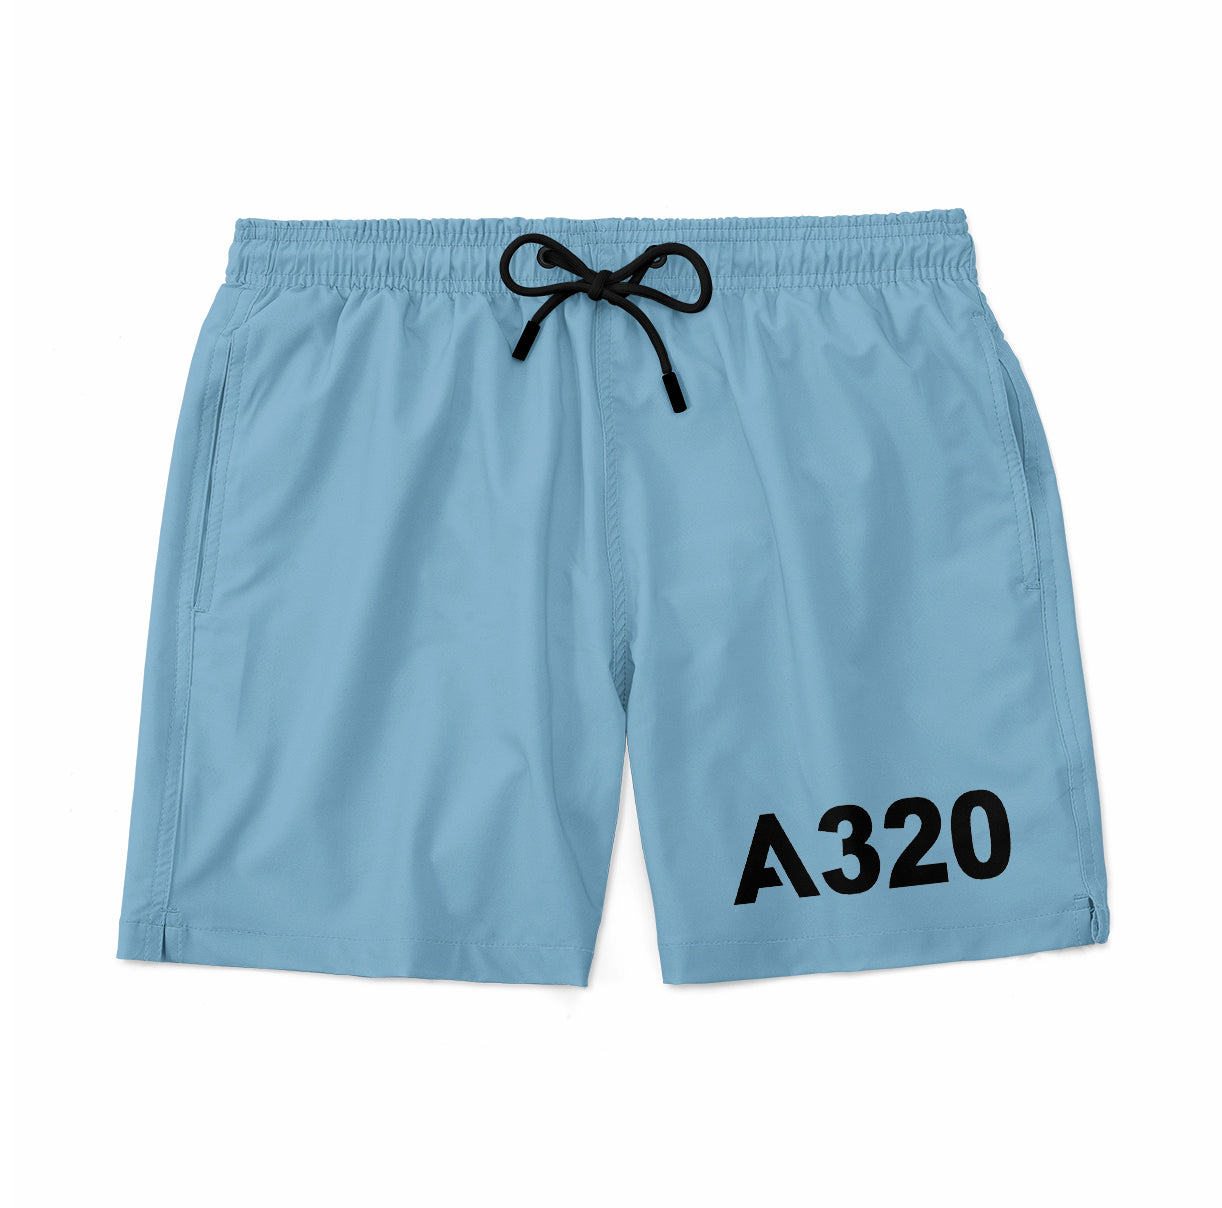 A320 Flat Text Designed Swim Trunks & Shorts